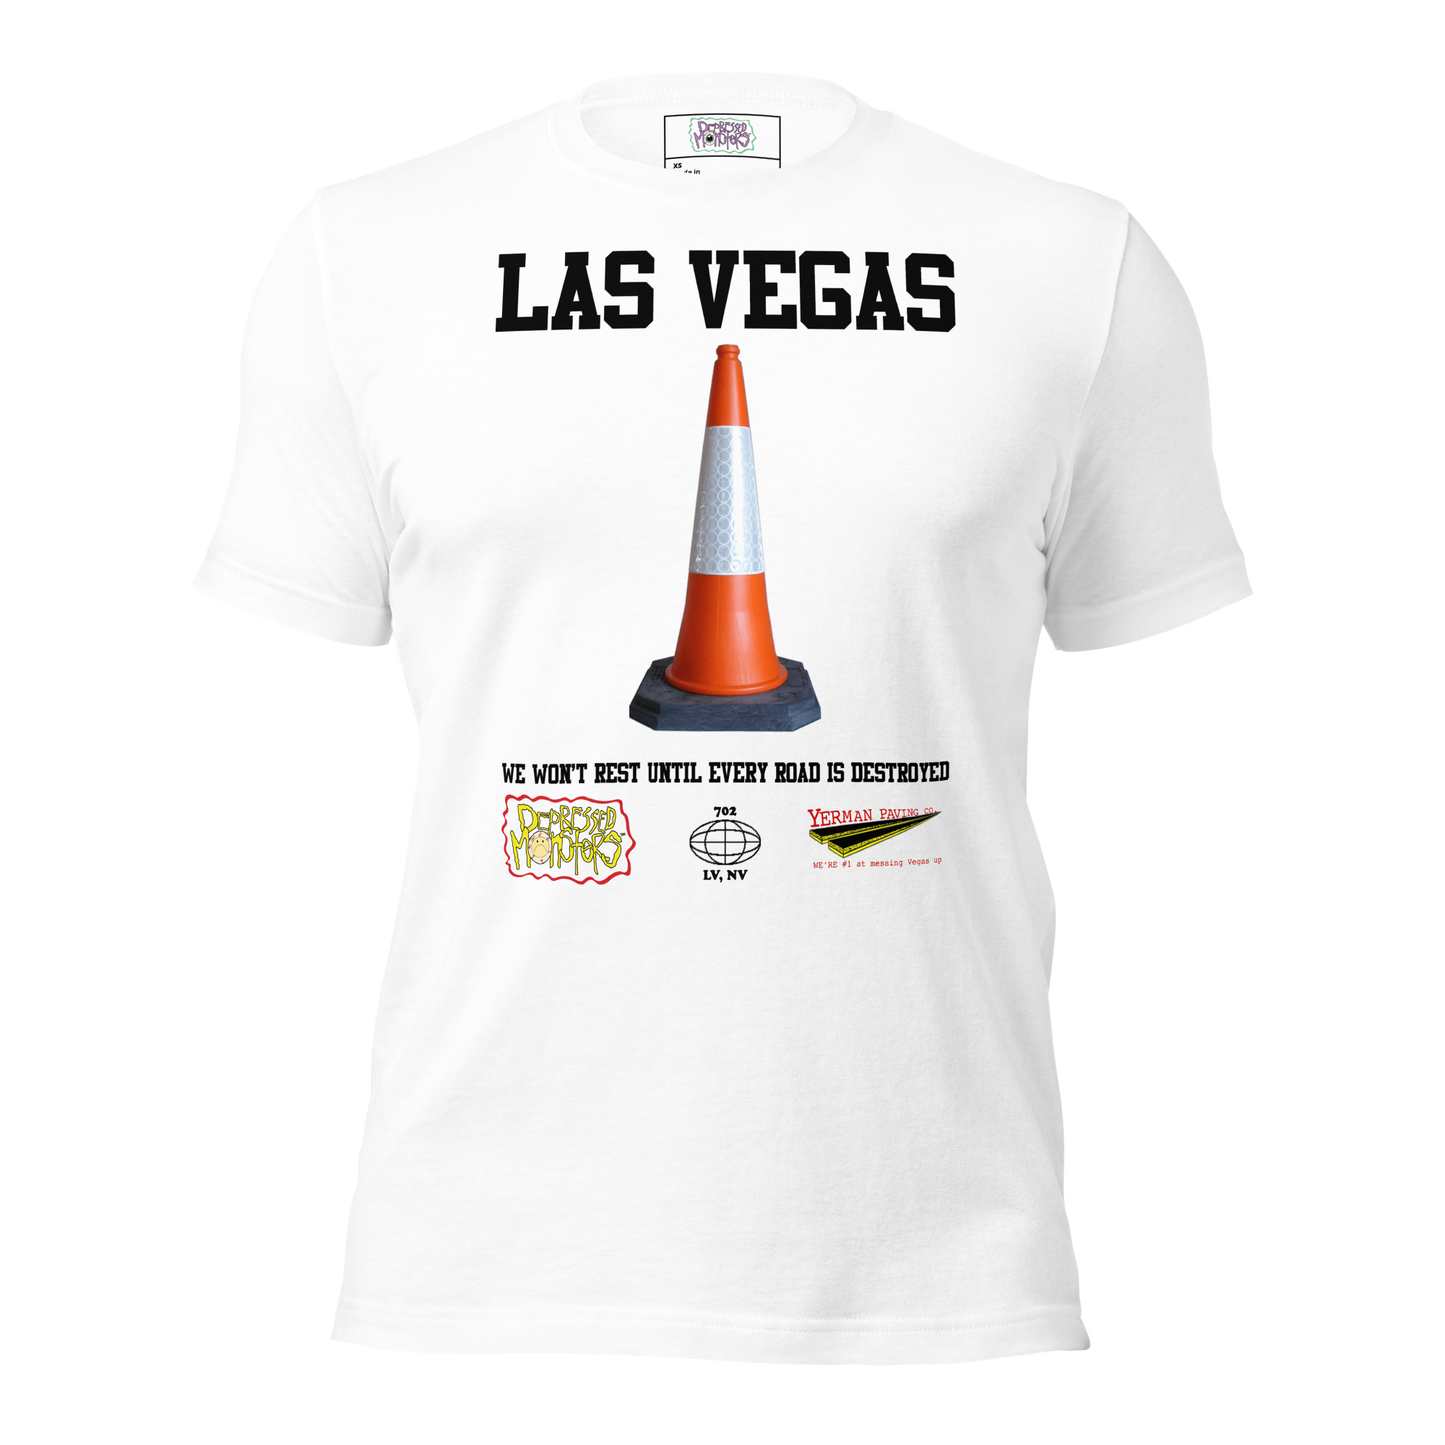 Las Vegas Cone Shirt